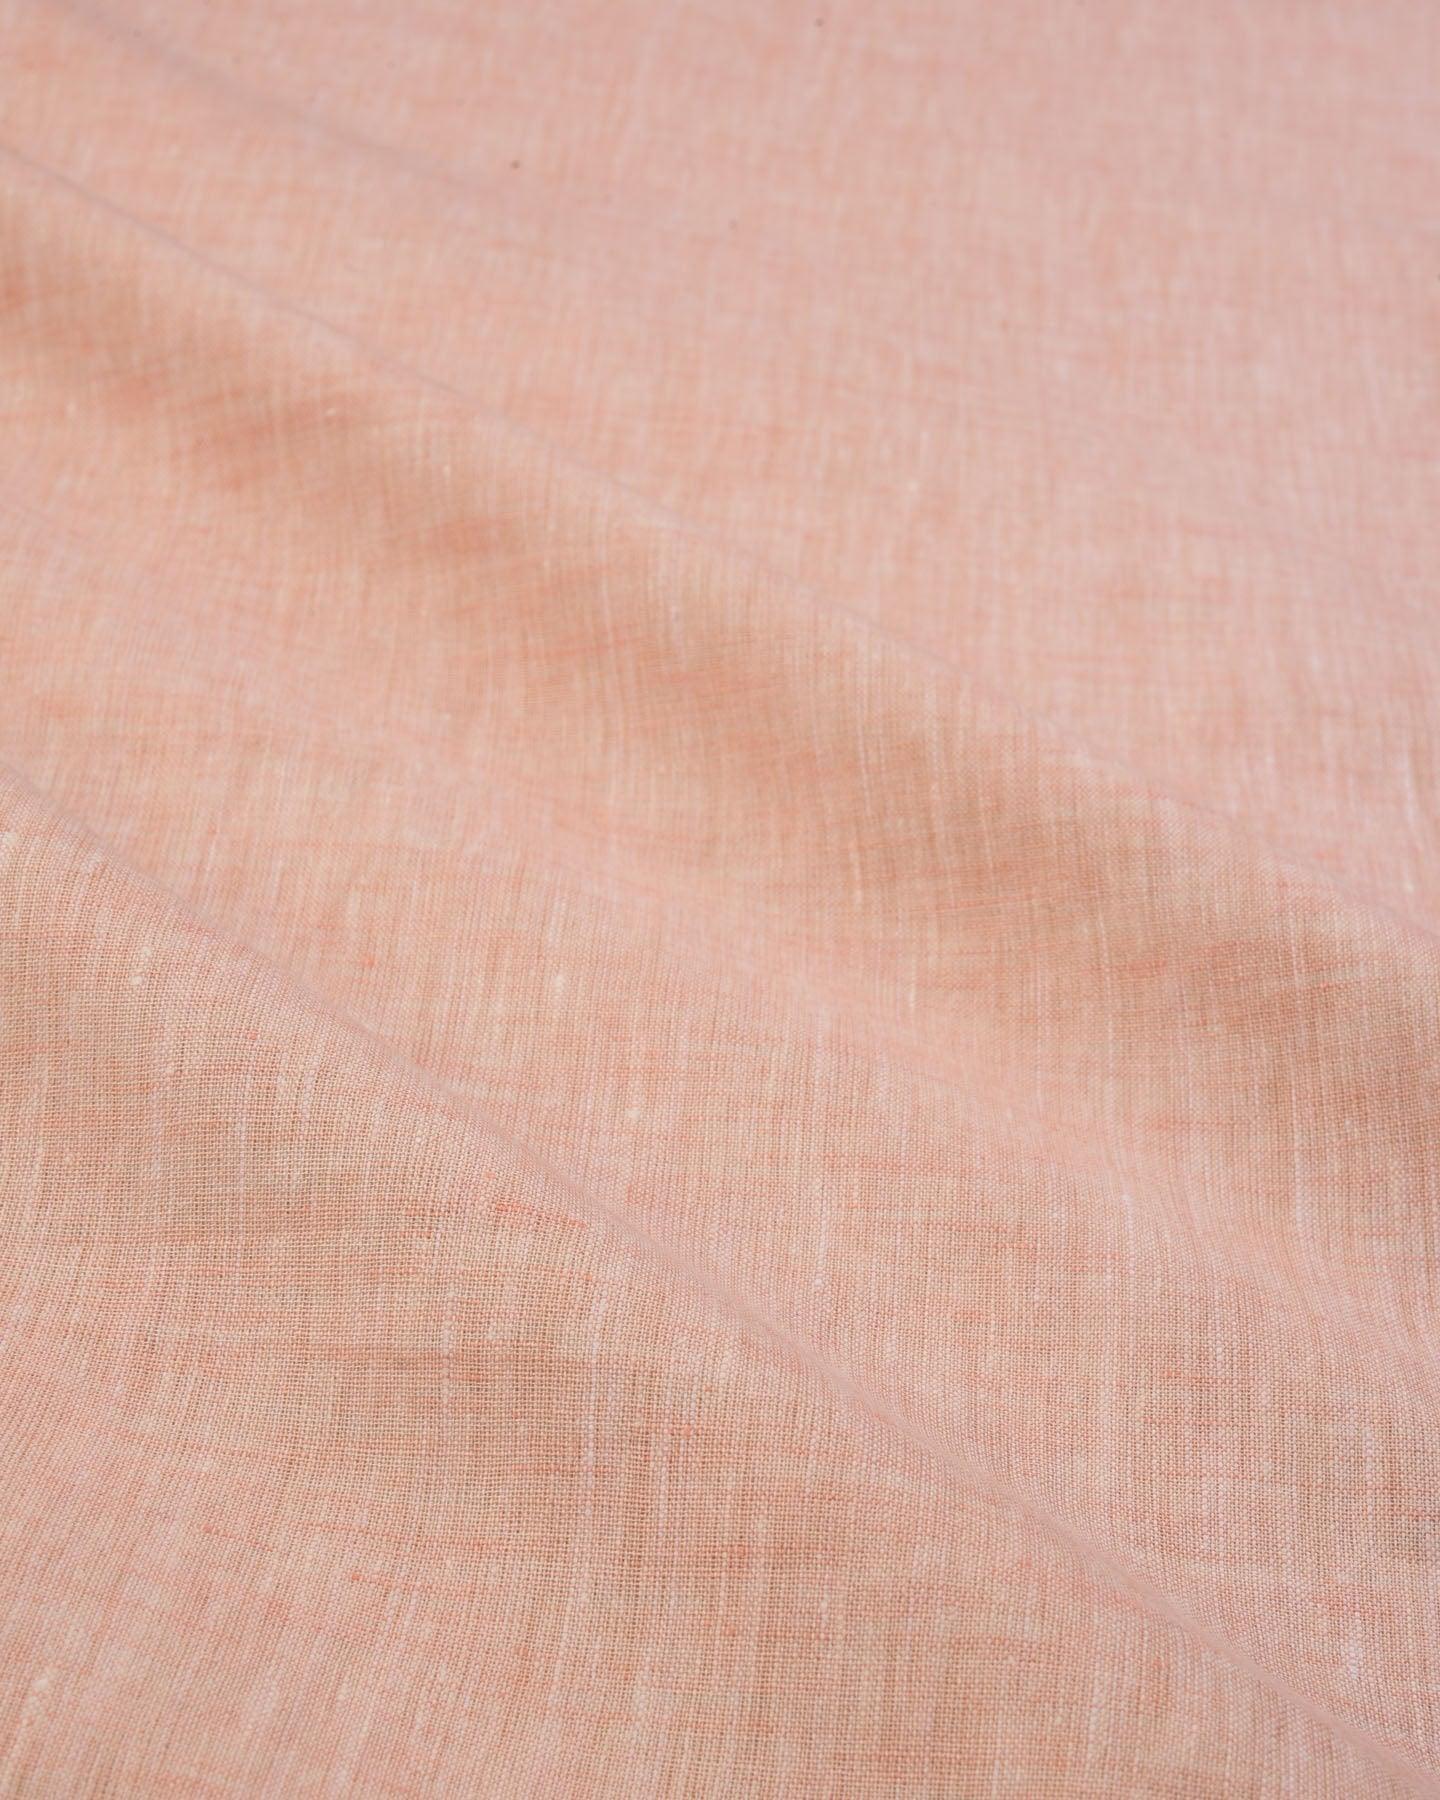 Peach Textured Plain Woven Cotton Linen Fabric - By HolyWeaves, Benares